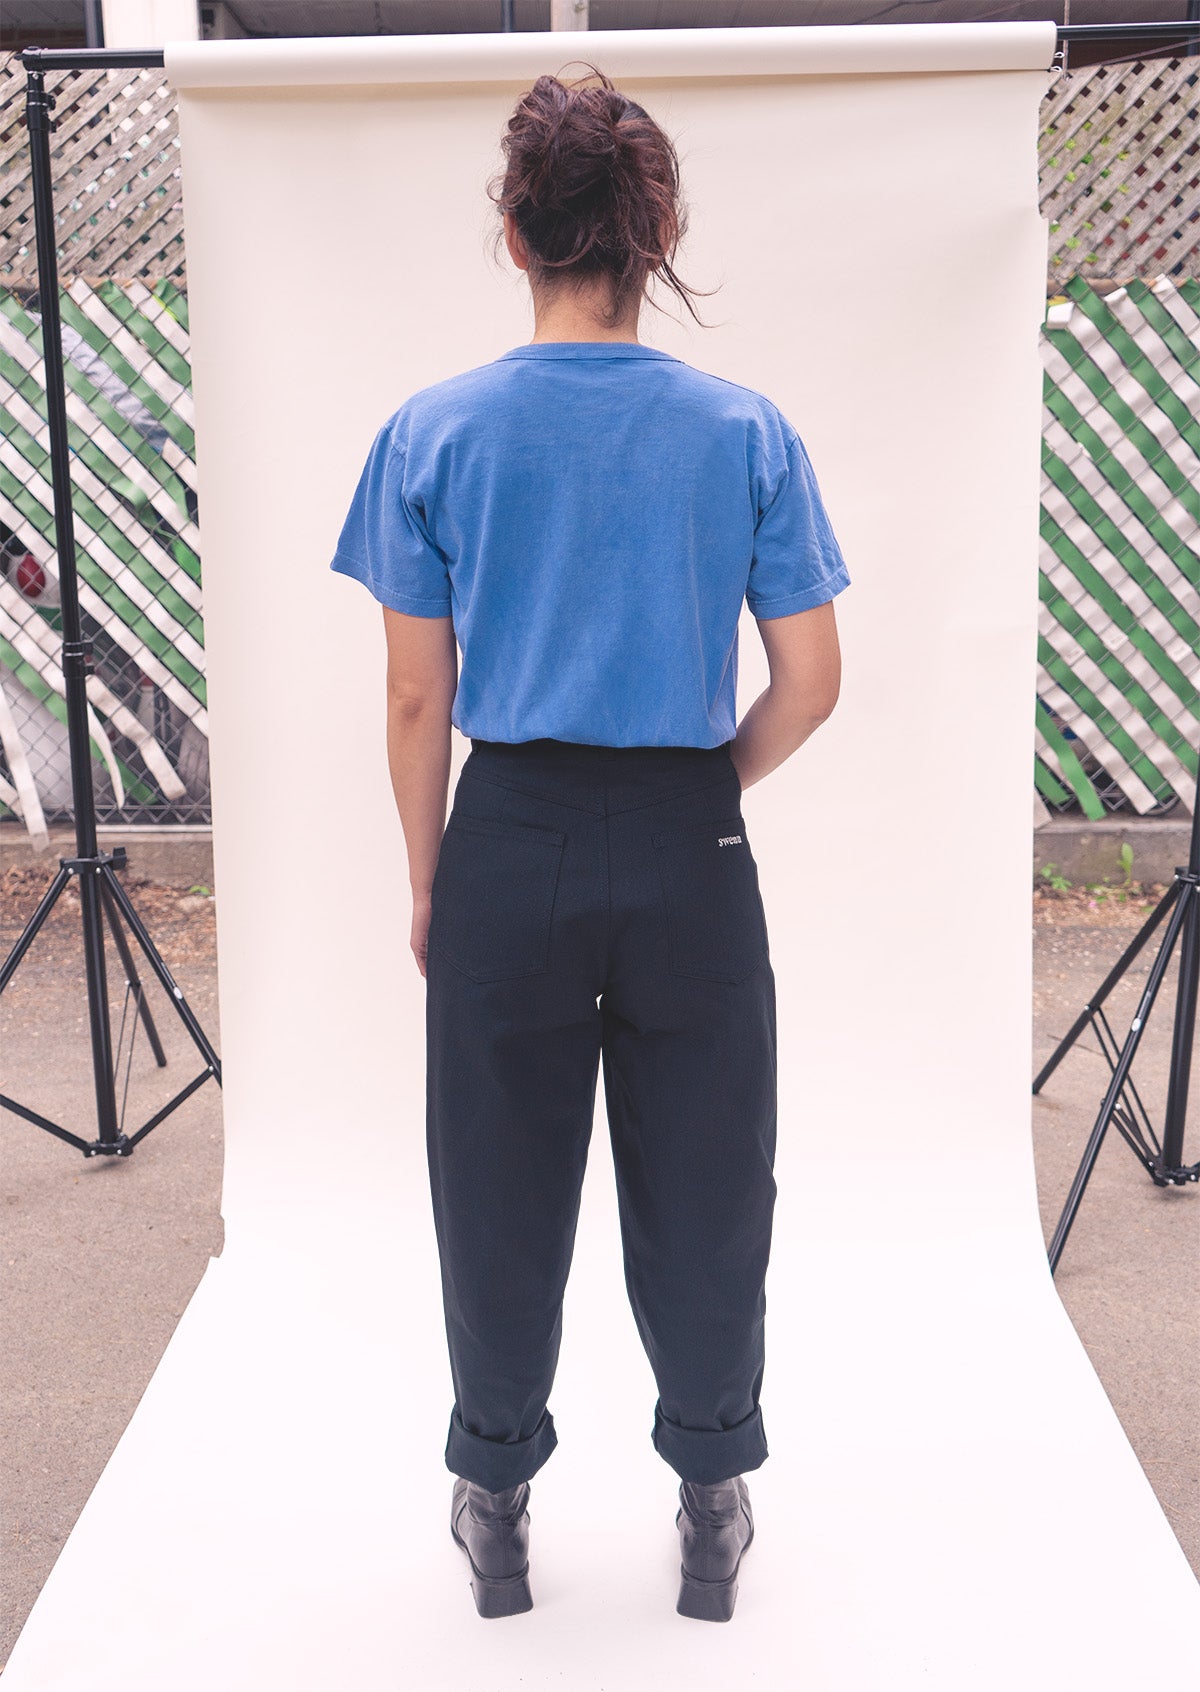 SWENN - High waist pants made in Montreal